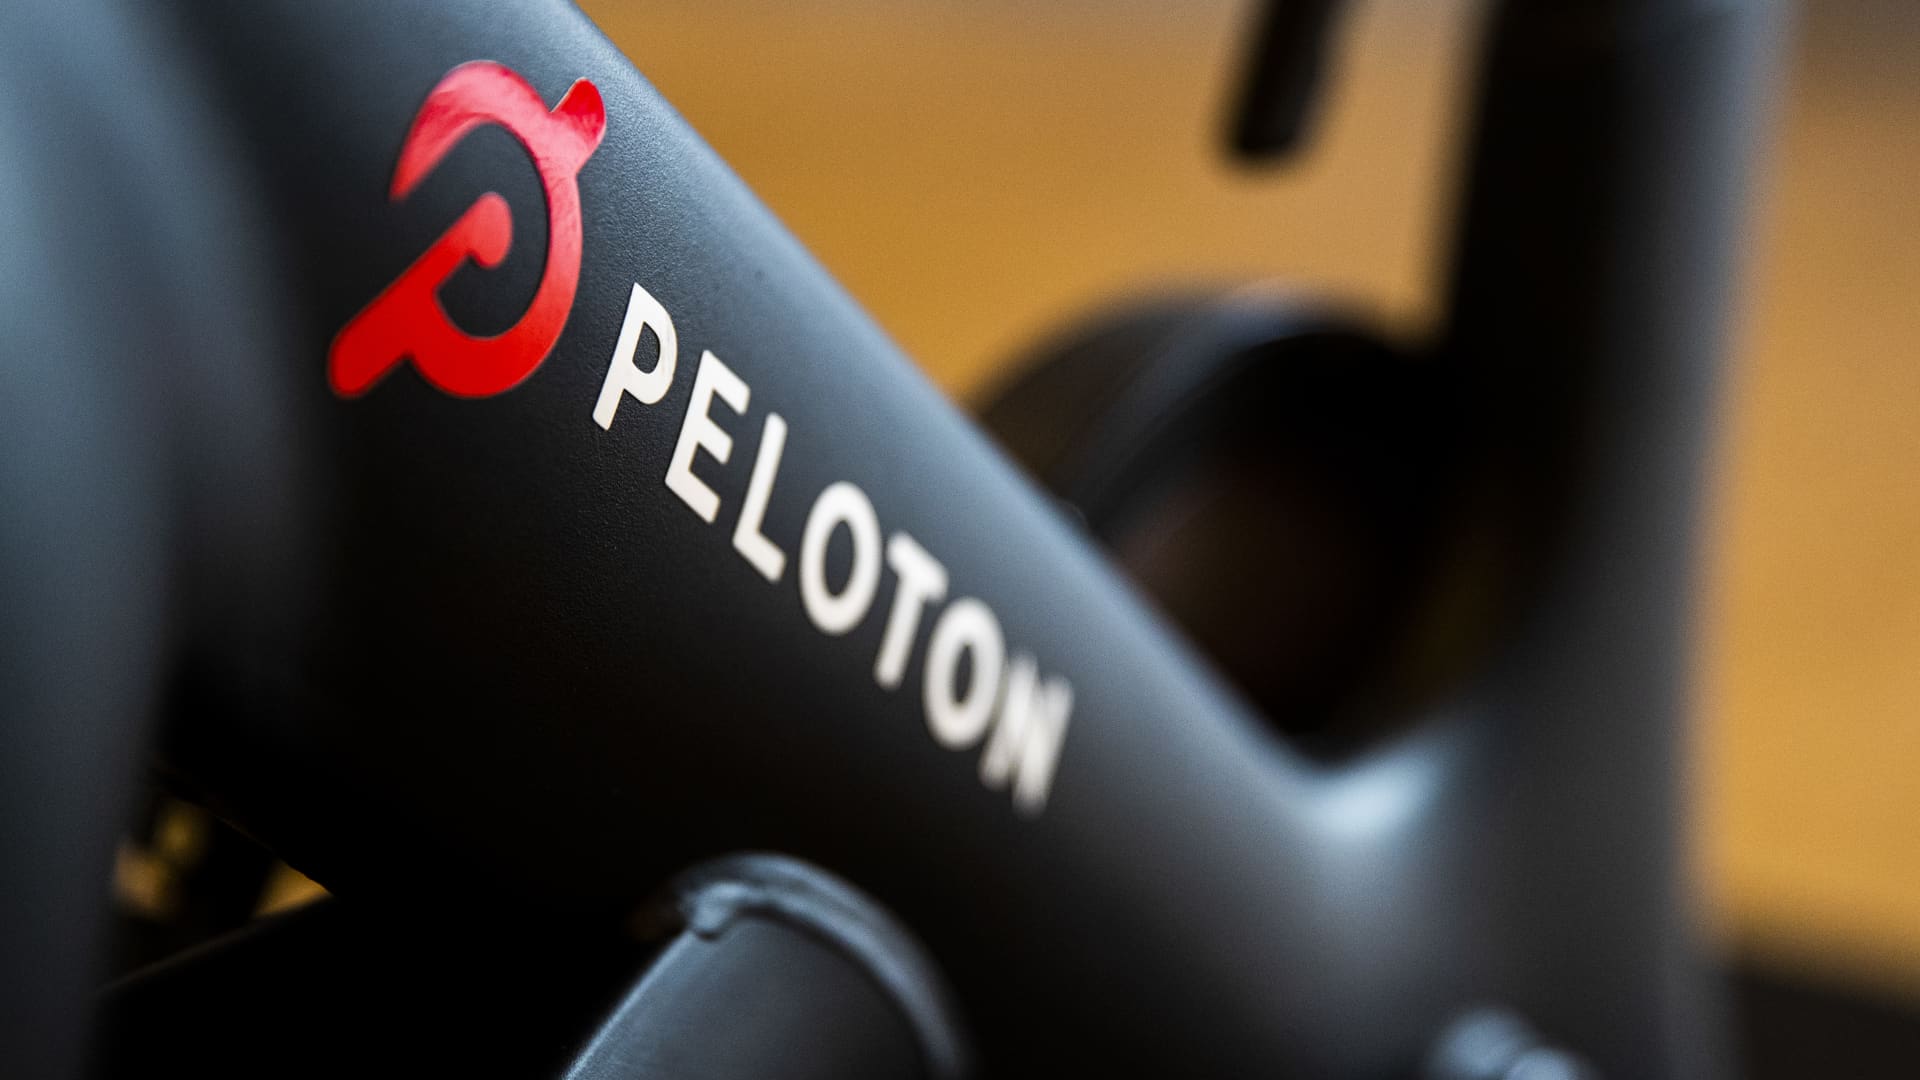 A Peloton Interactive Inc. logo on a stationary bike at the company's showroom in Dedham, Massachusetts, U.S., on Wednesday, Feb. 3, 2021.